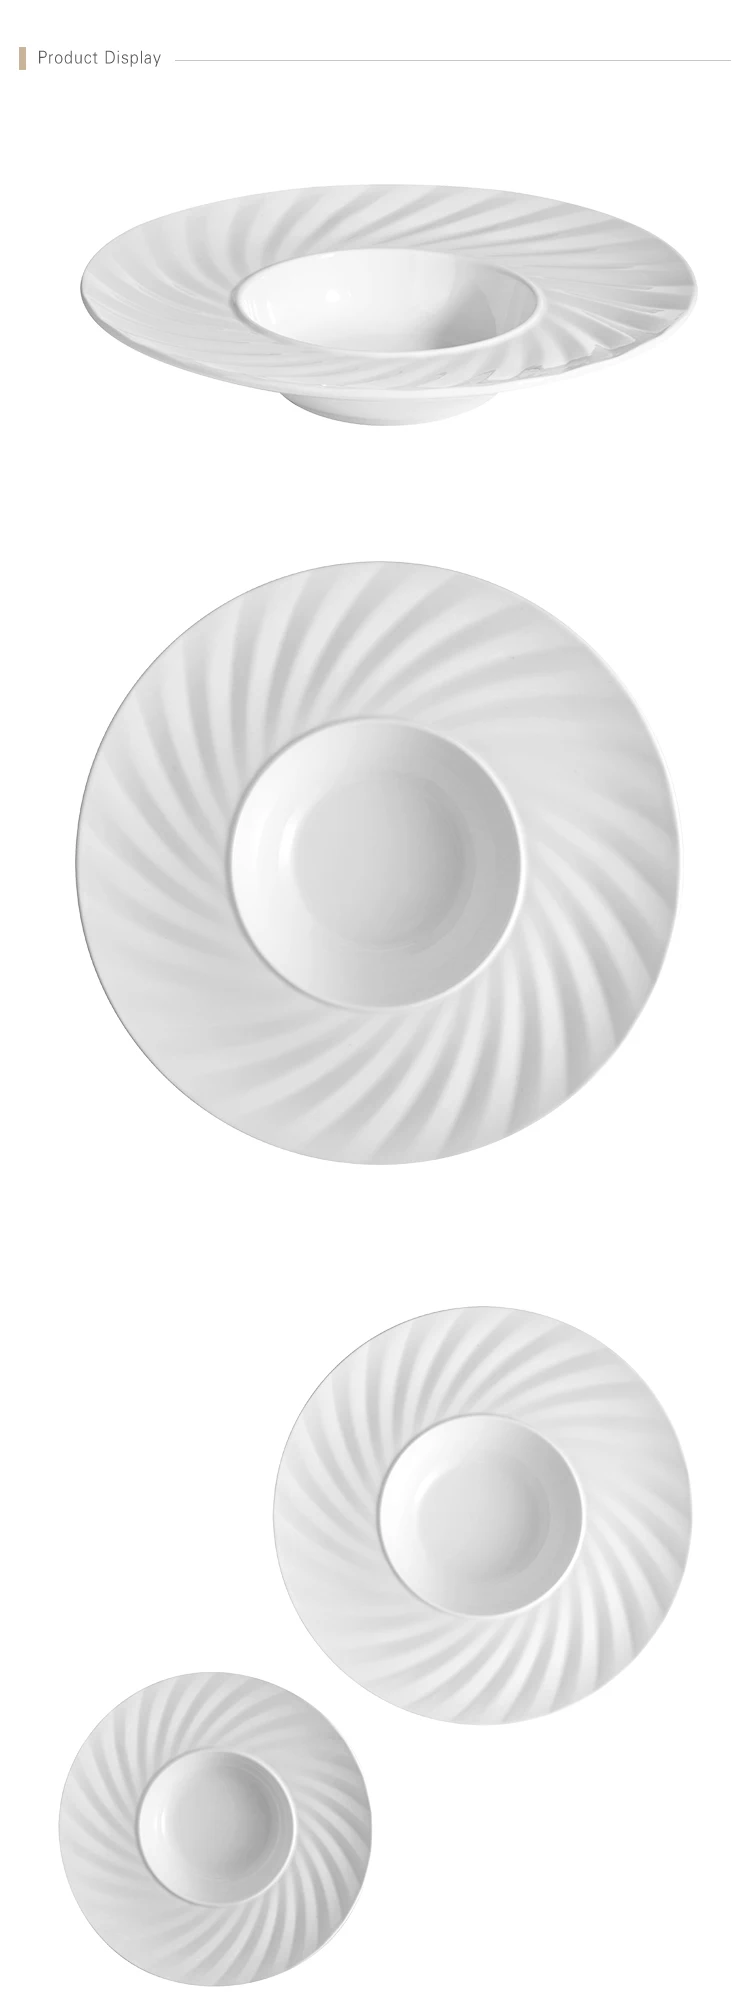 LFGB/FDA/SGS Certificate Ceramic Porcelain Pasta Plate,  Plate Chargers Wedding Decoration, Bulk White Plate Wedding